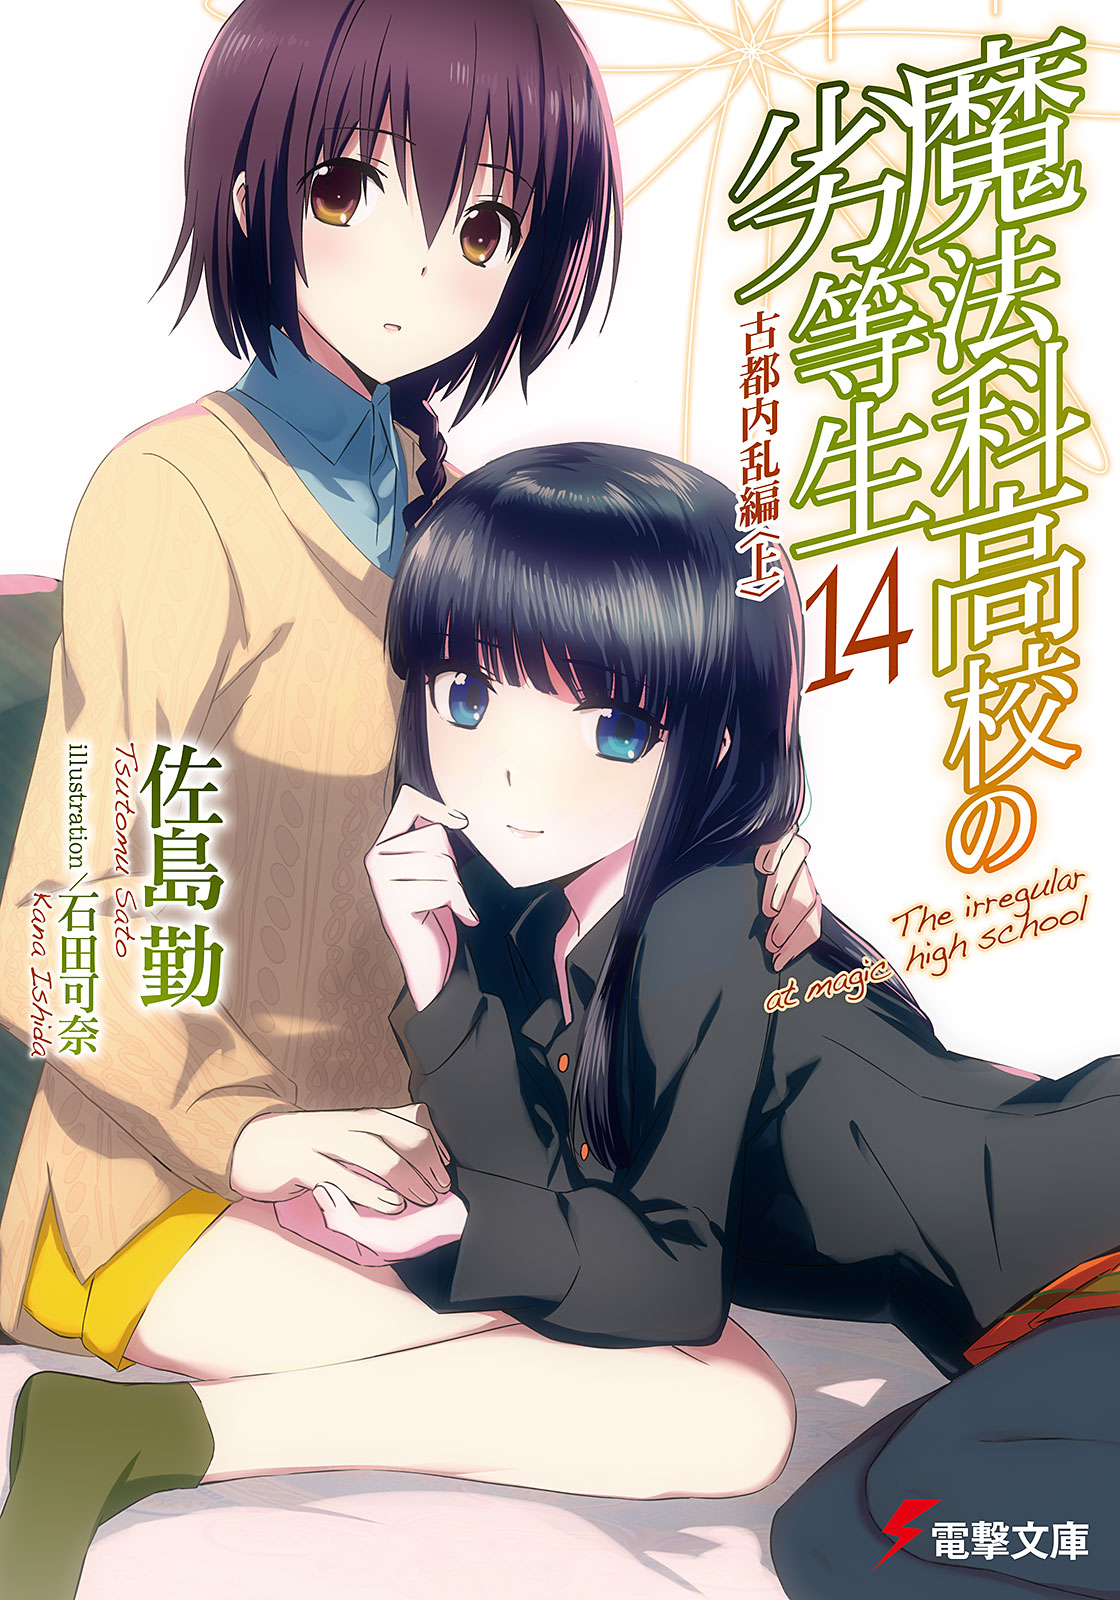 12 Anime Like Mahouka Koukou No Rettousei (The Irregular at Magic High  School) - HubPages